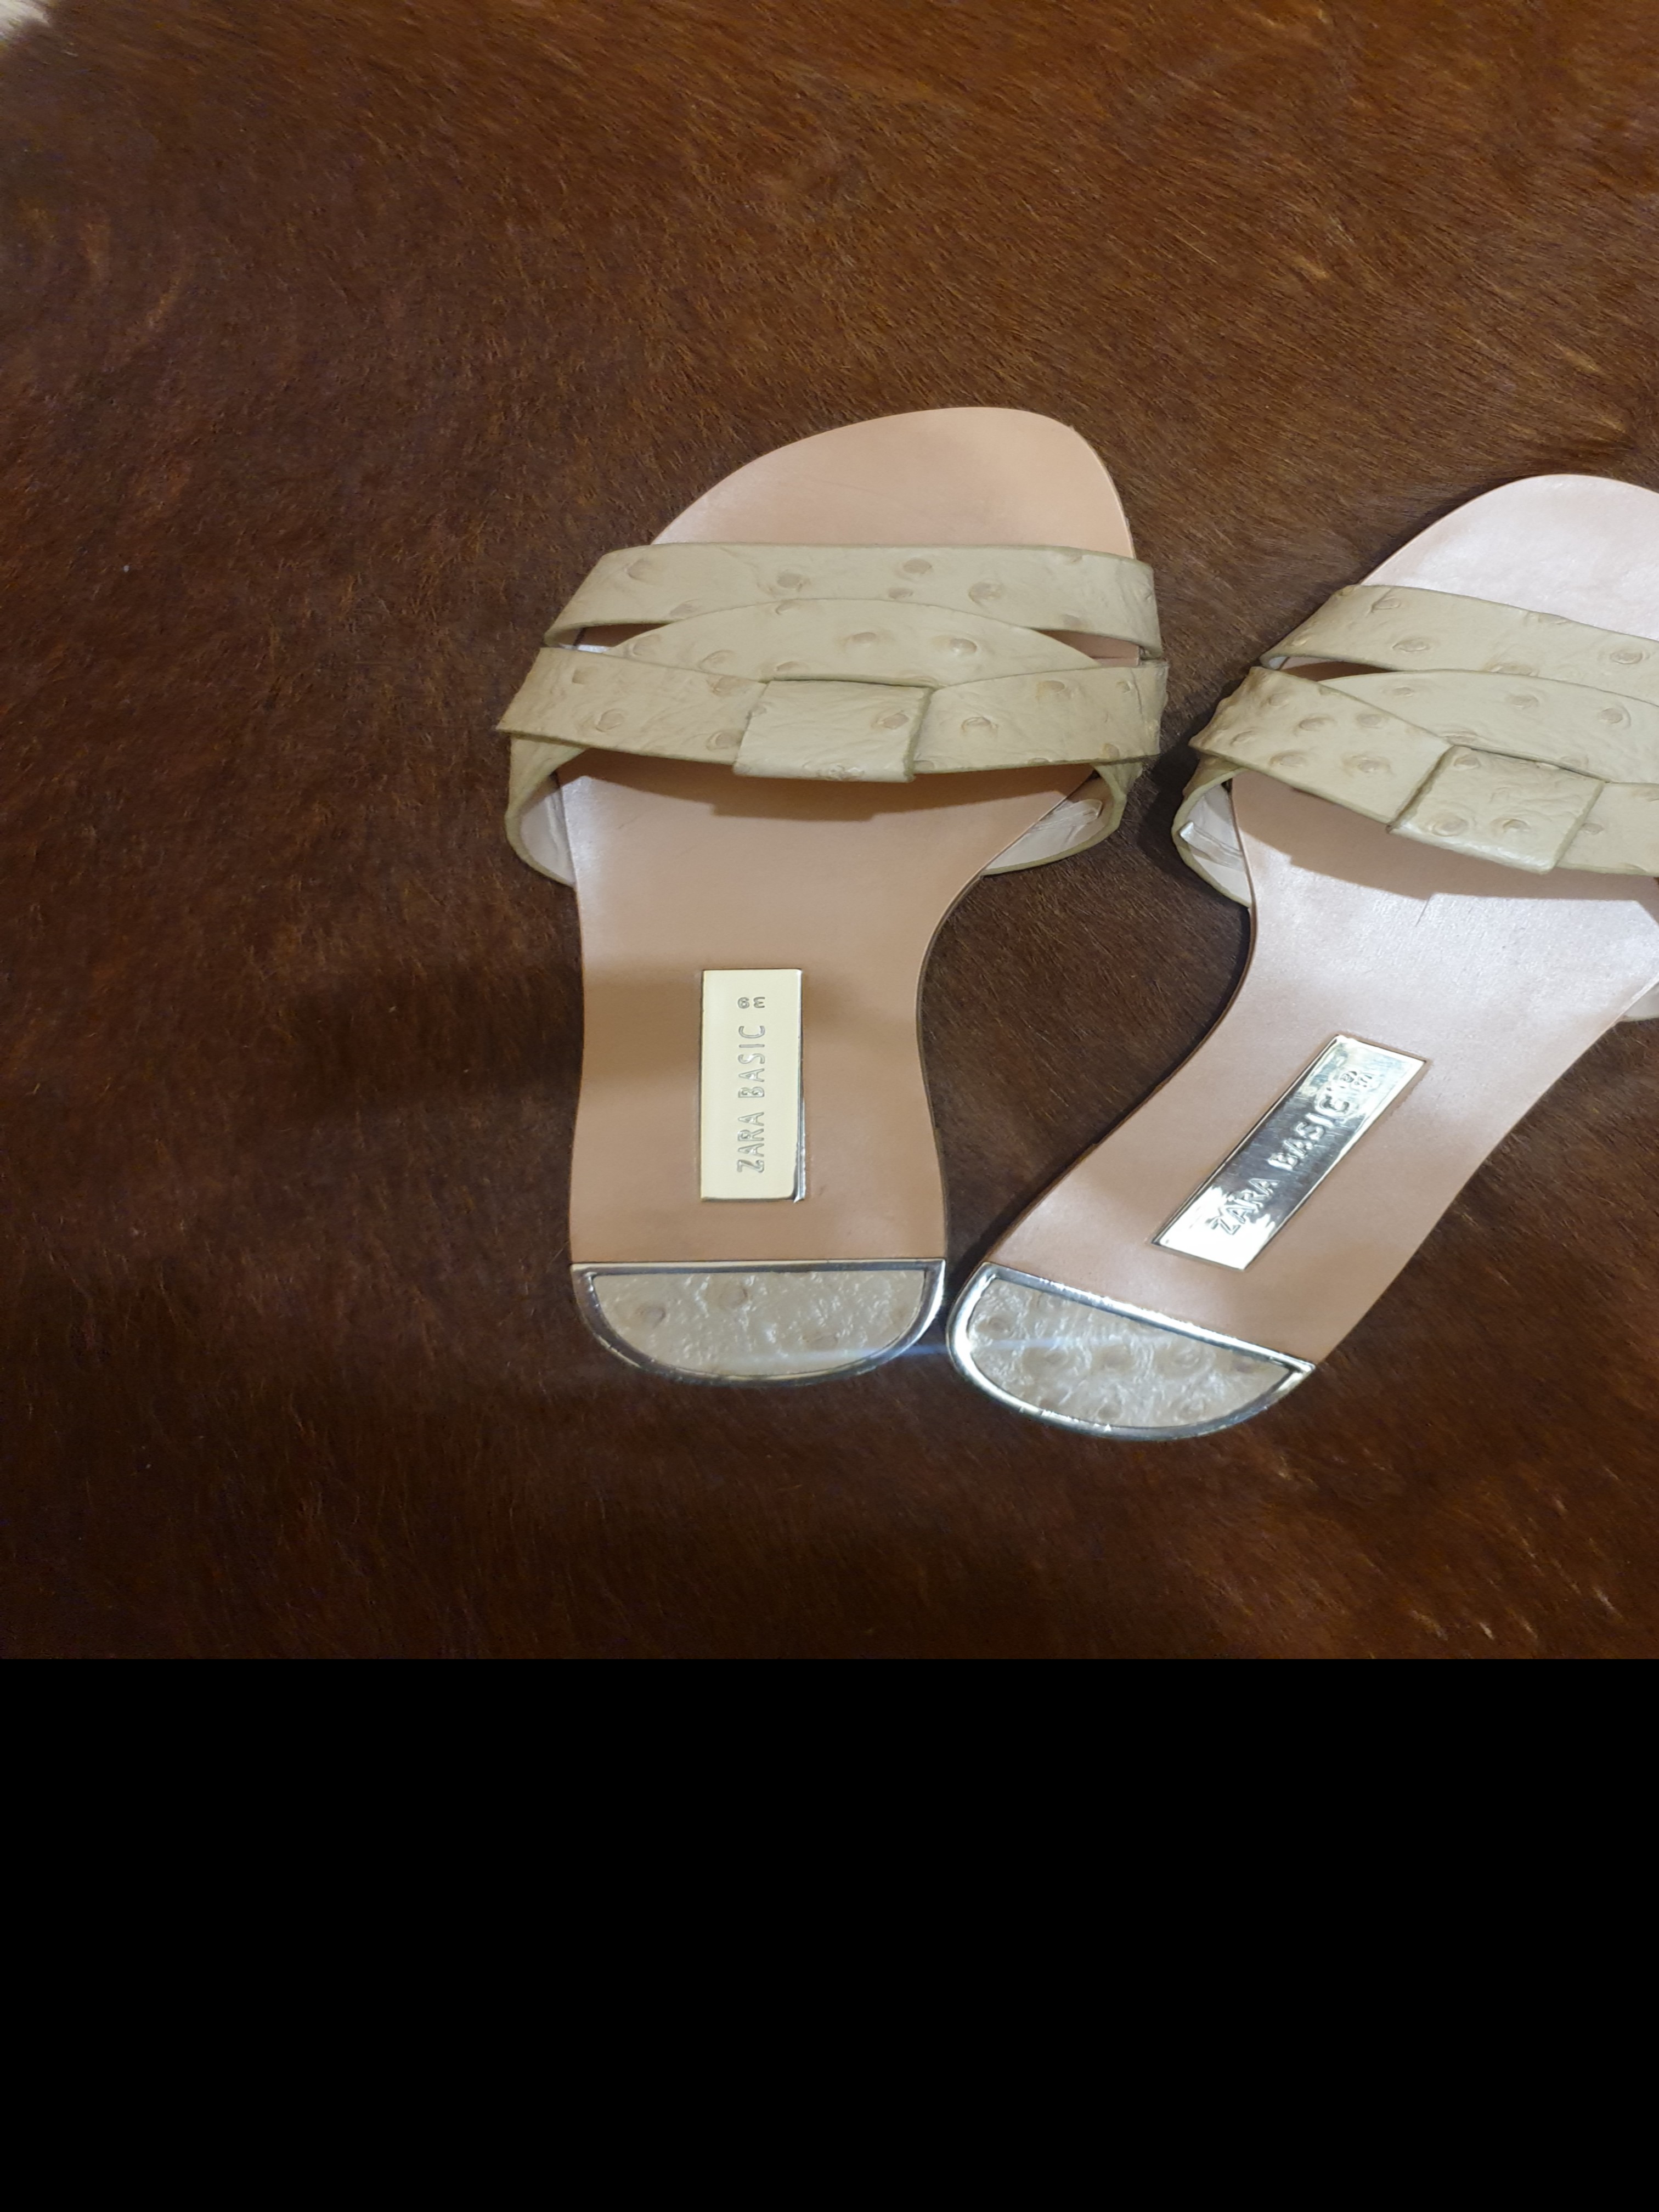 zara animal print flat sandals